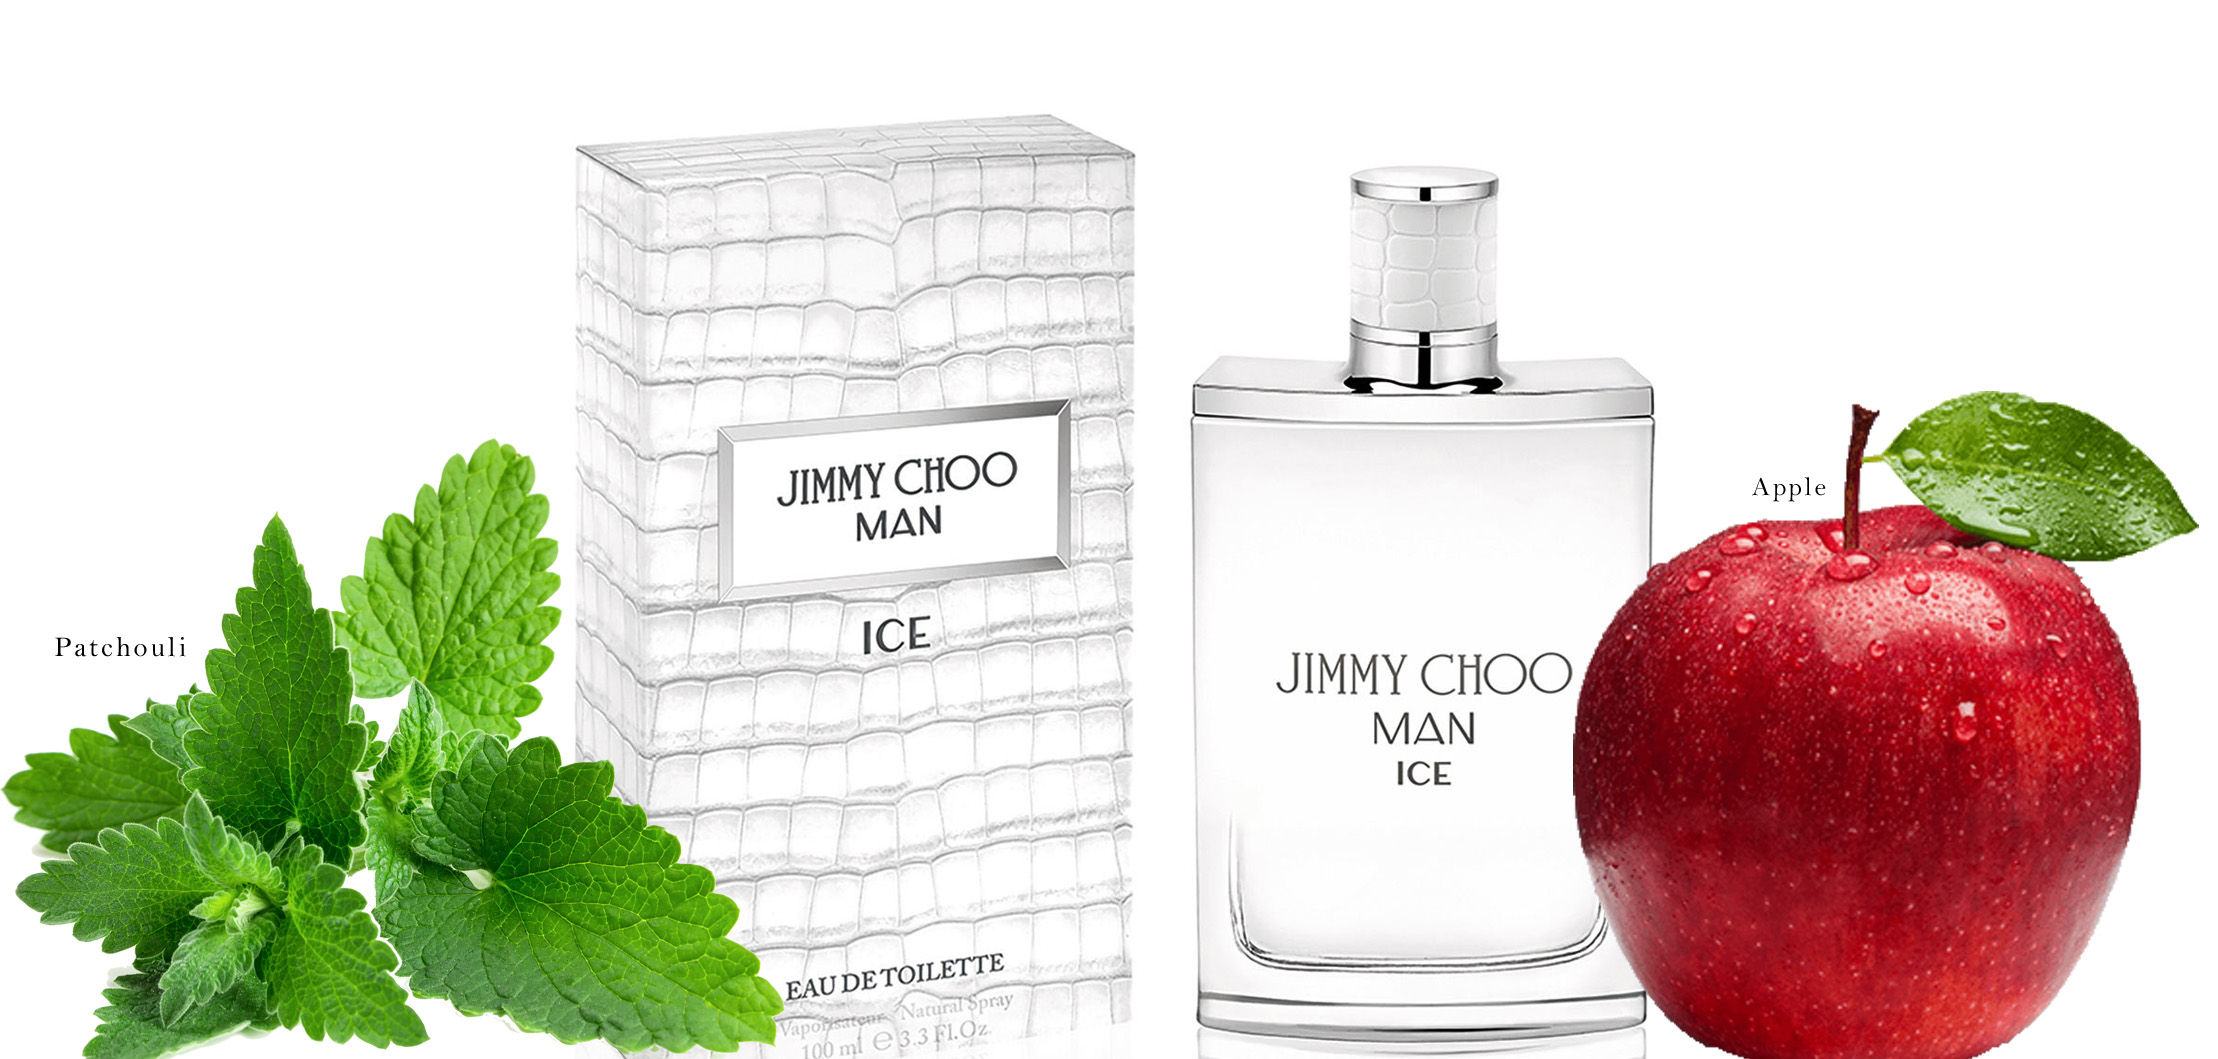 Jimmy Choo, man ice fragrance